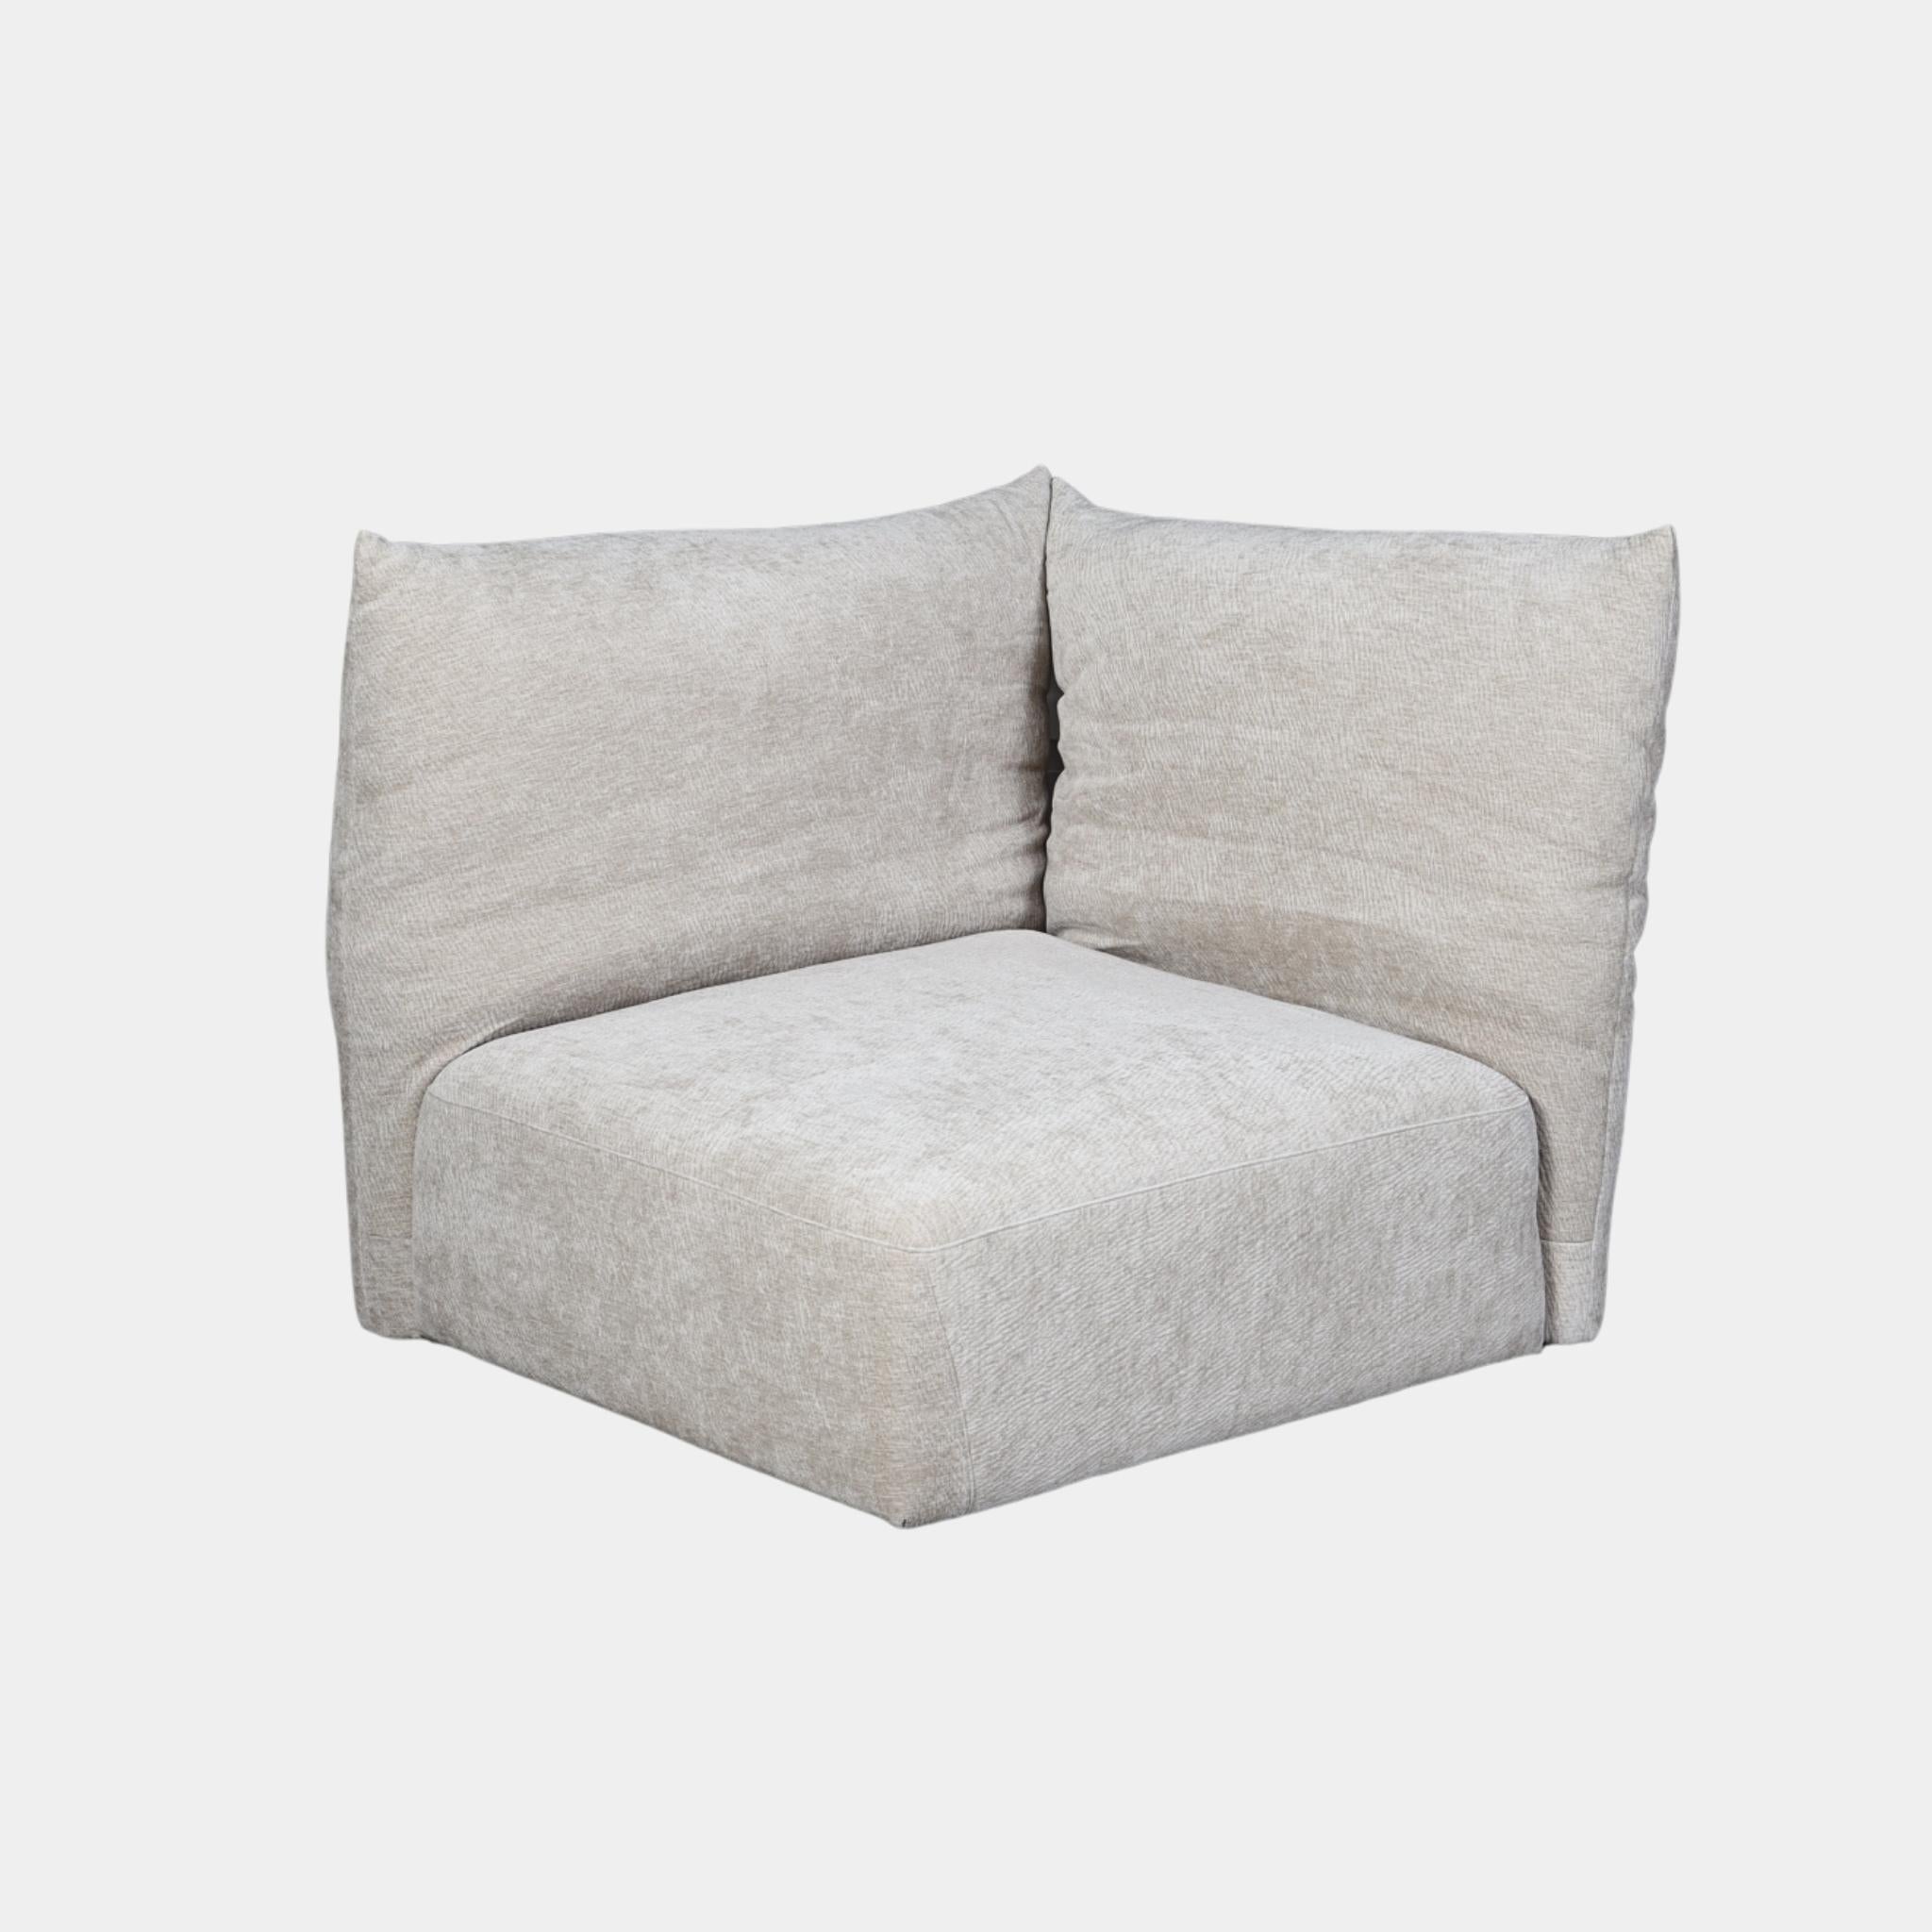 Petal Modular Sofa - The Feelter